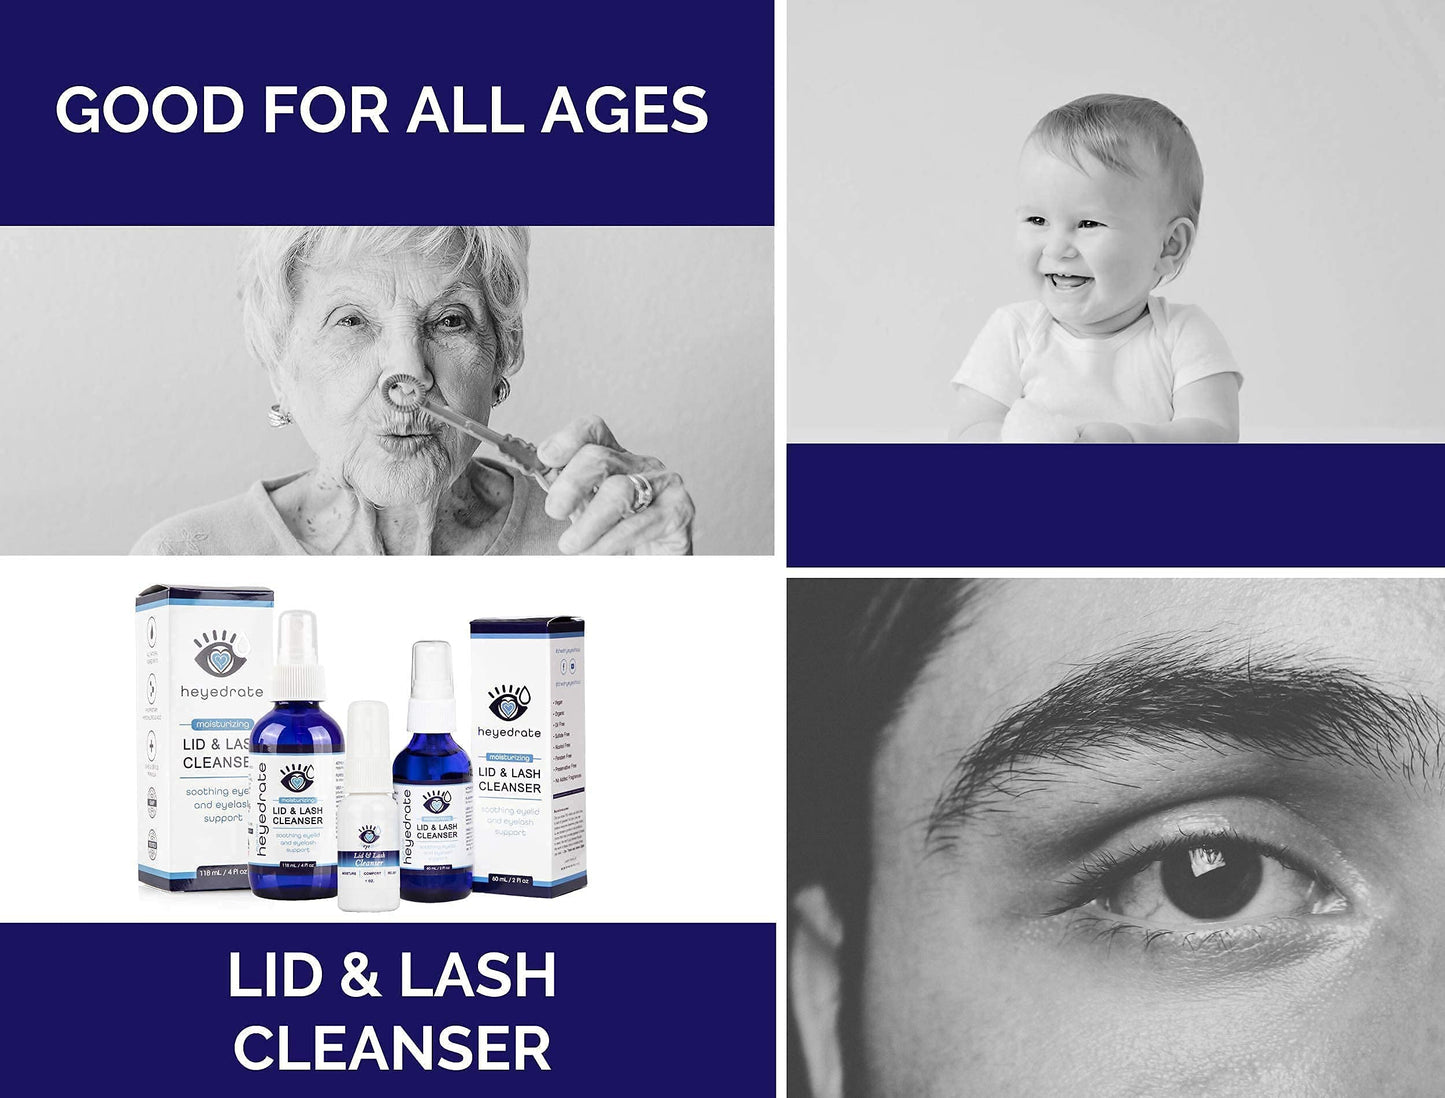 Heyedrate Lid & Lash Cleanser for Stye, Blepharitis, Dry Eyes, Meibomian Gland Dysfunction, Rosacea, and Eye Irritation Relief | Hypochlorous Acid Eyelid Cleanser Spray